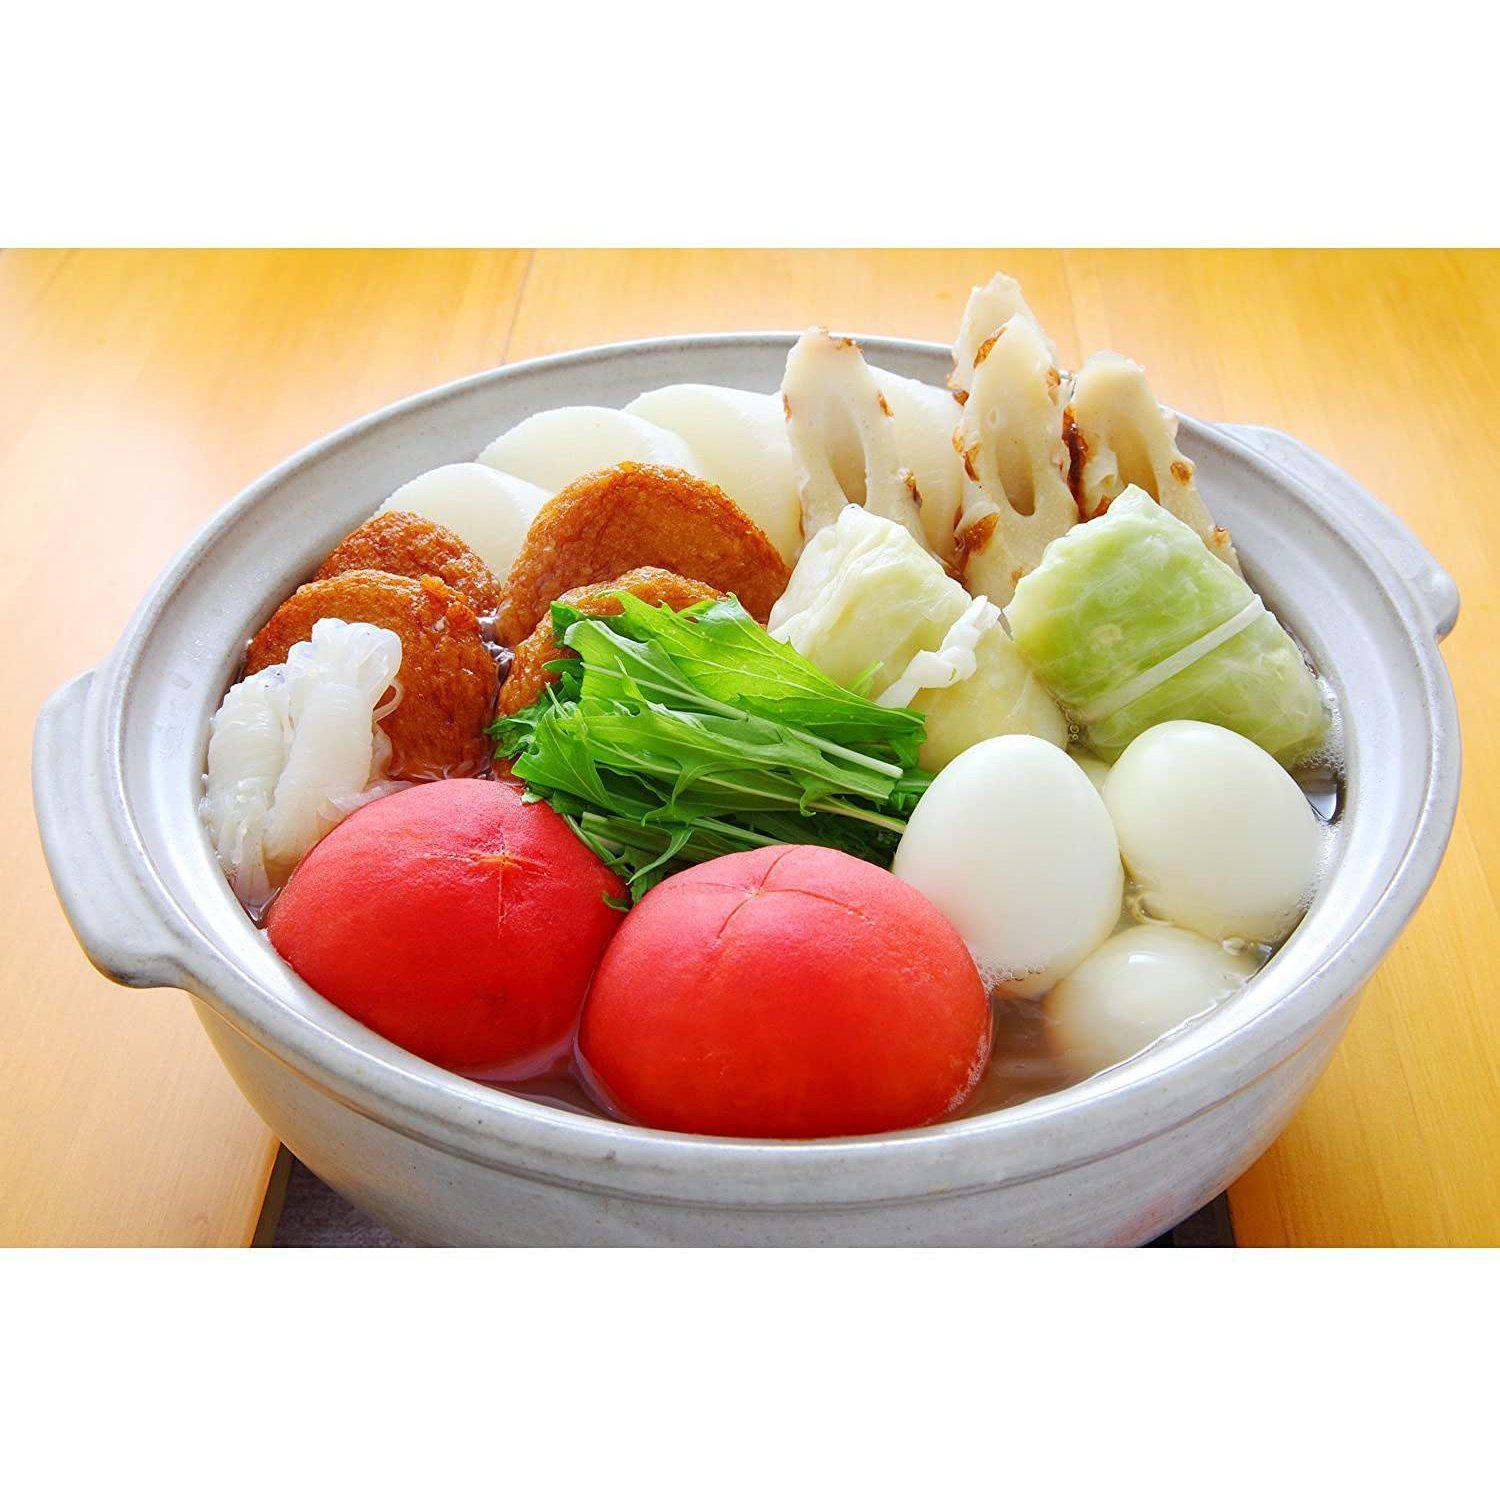 Mizkan Shiro Dashi Sauce Professional Taste 500ml